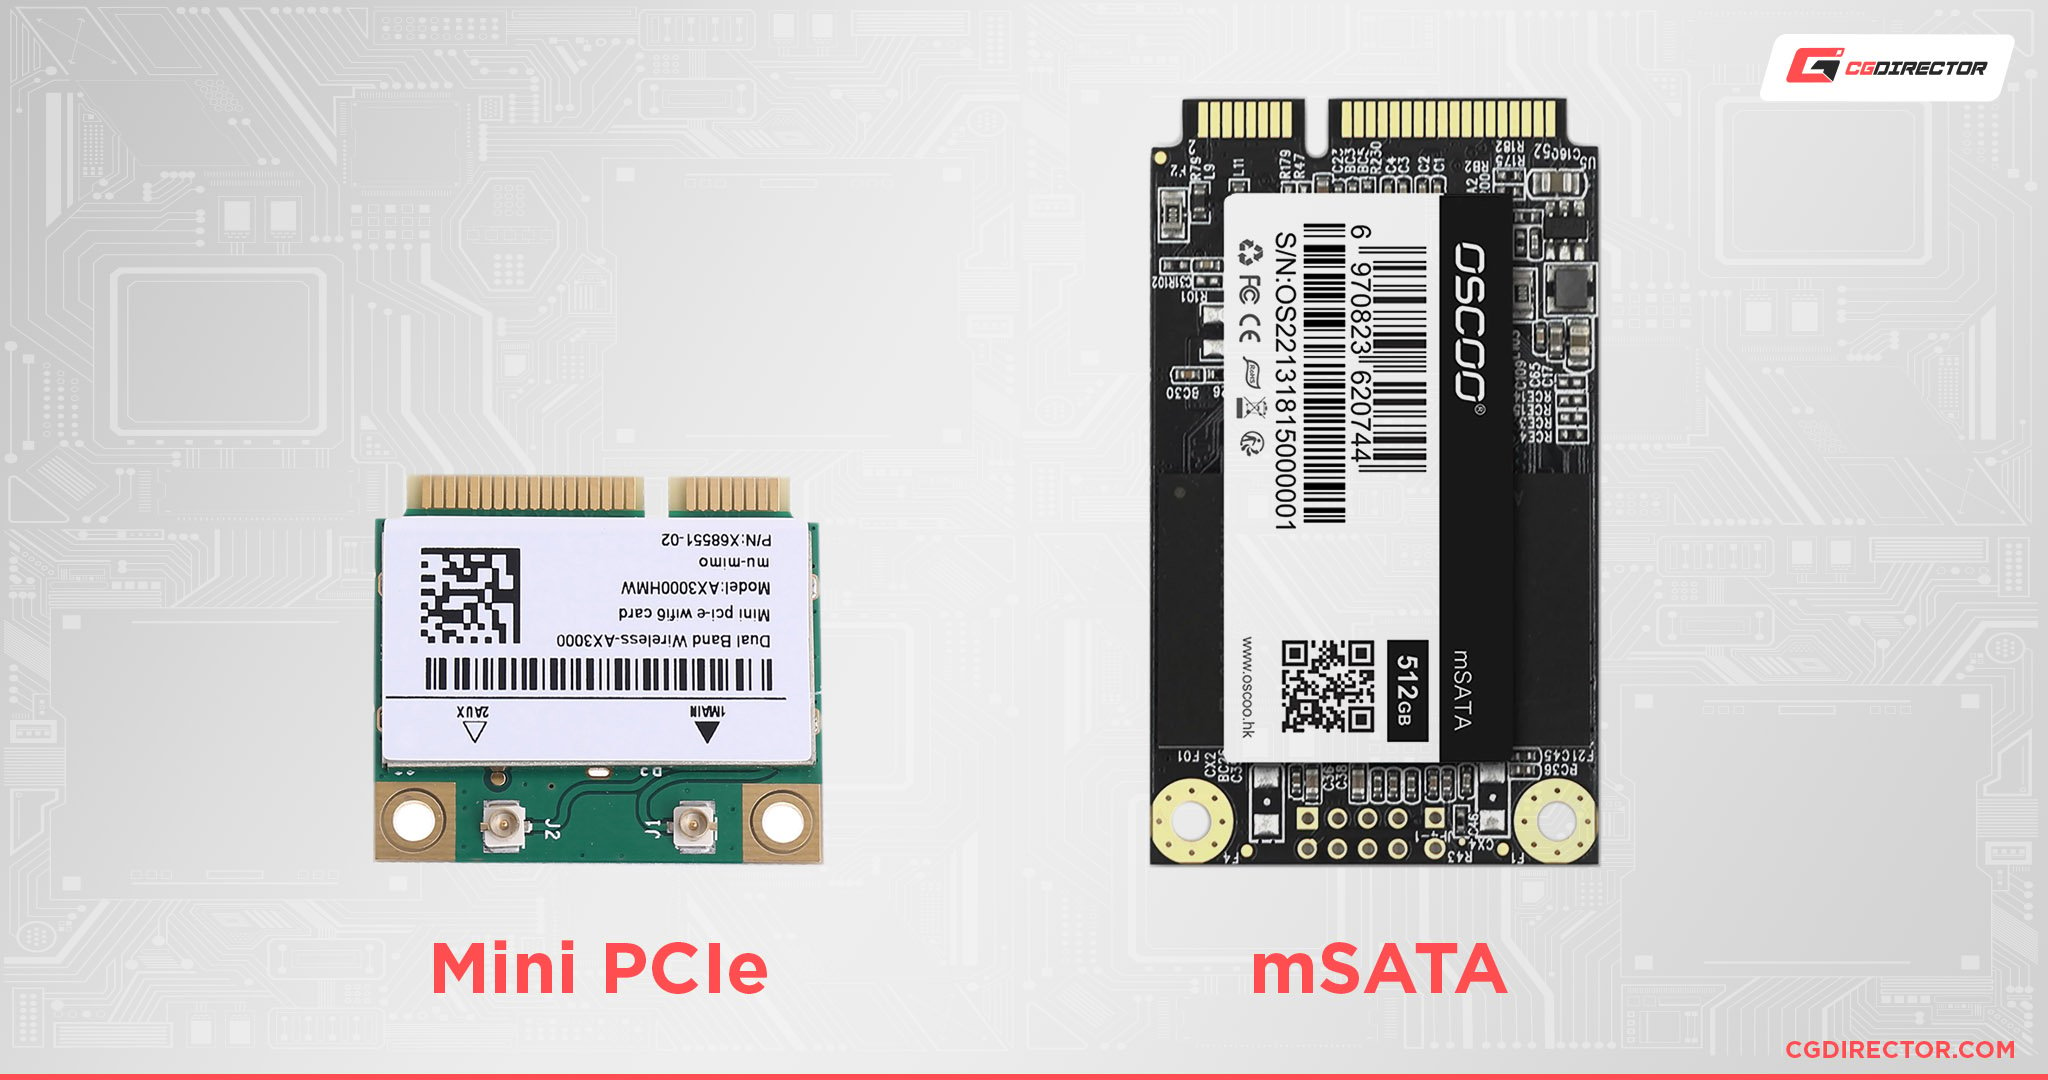 Mini PCIe vs mSATA form factor